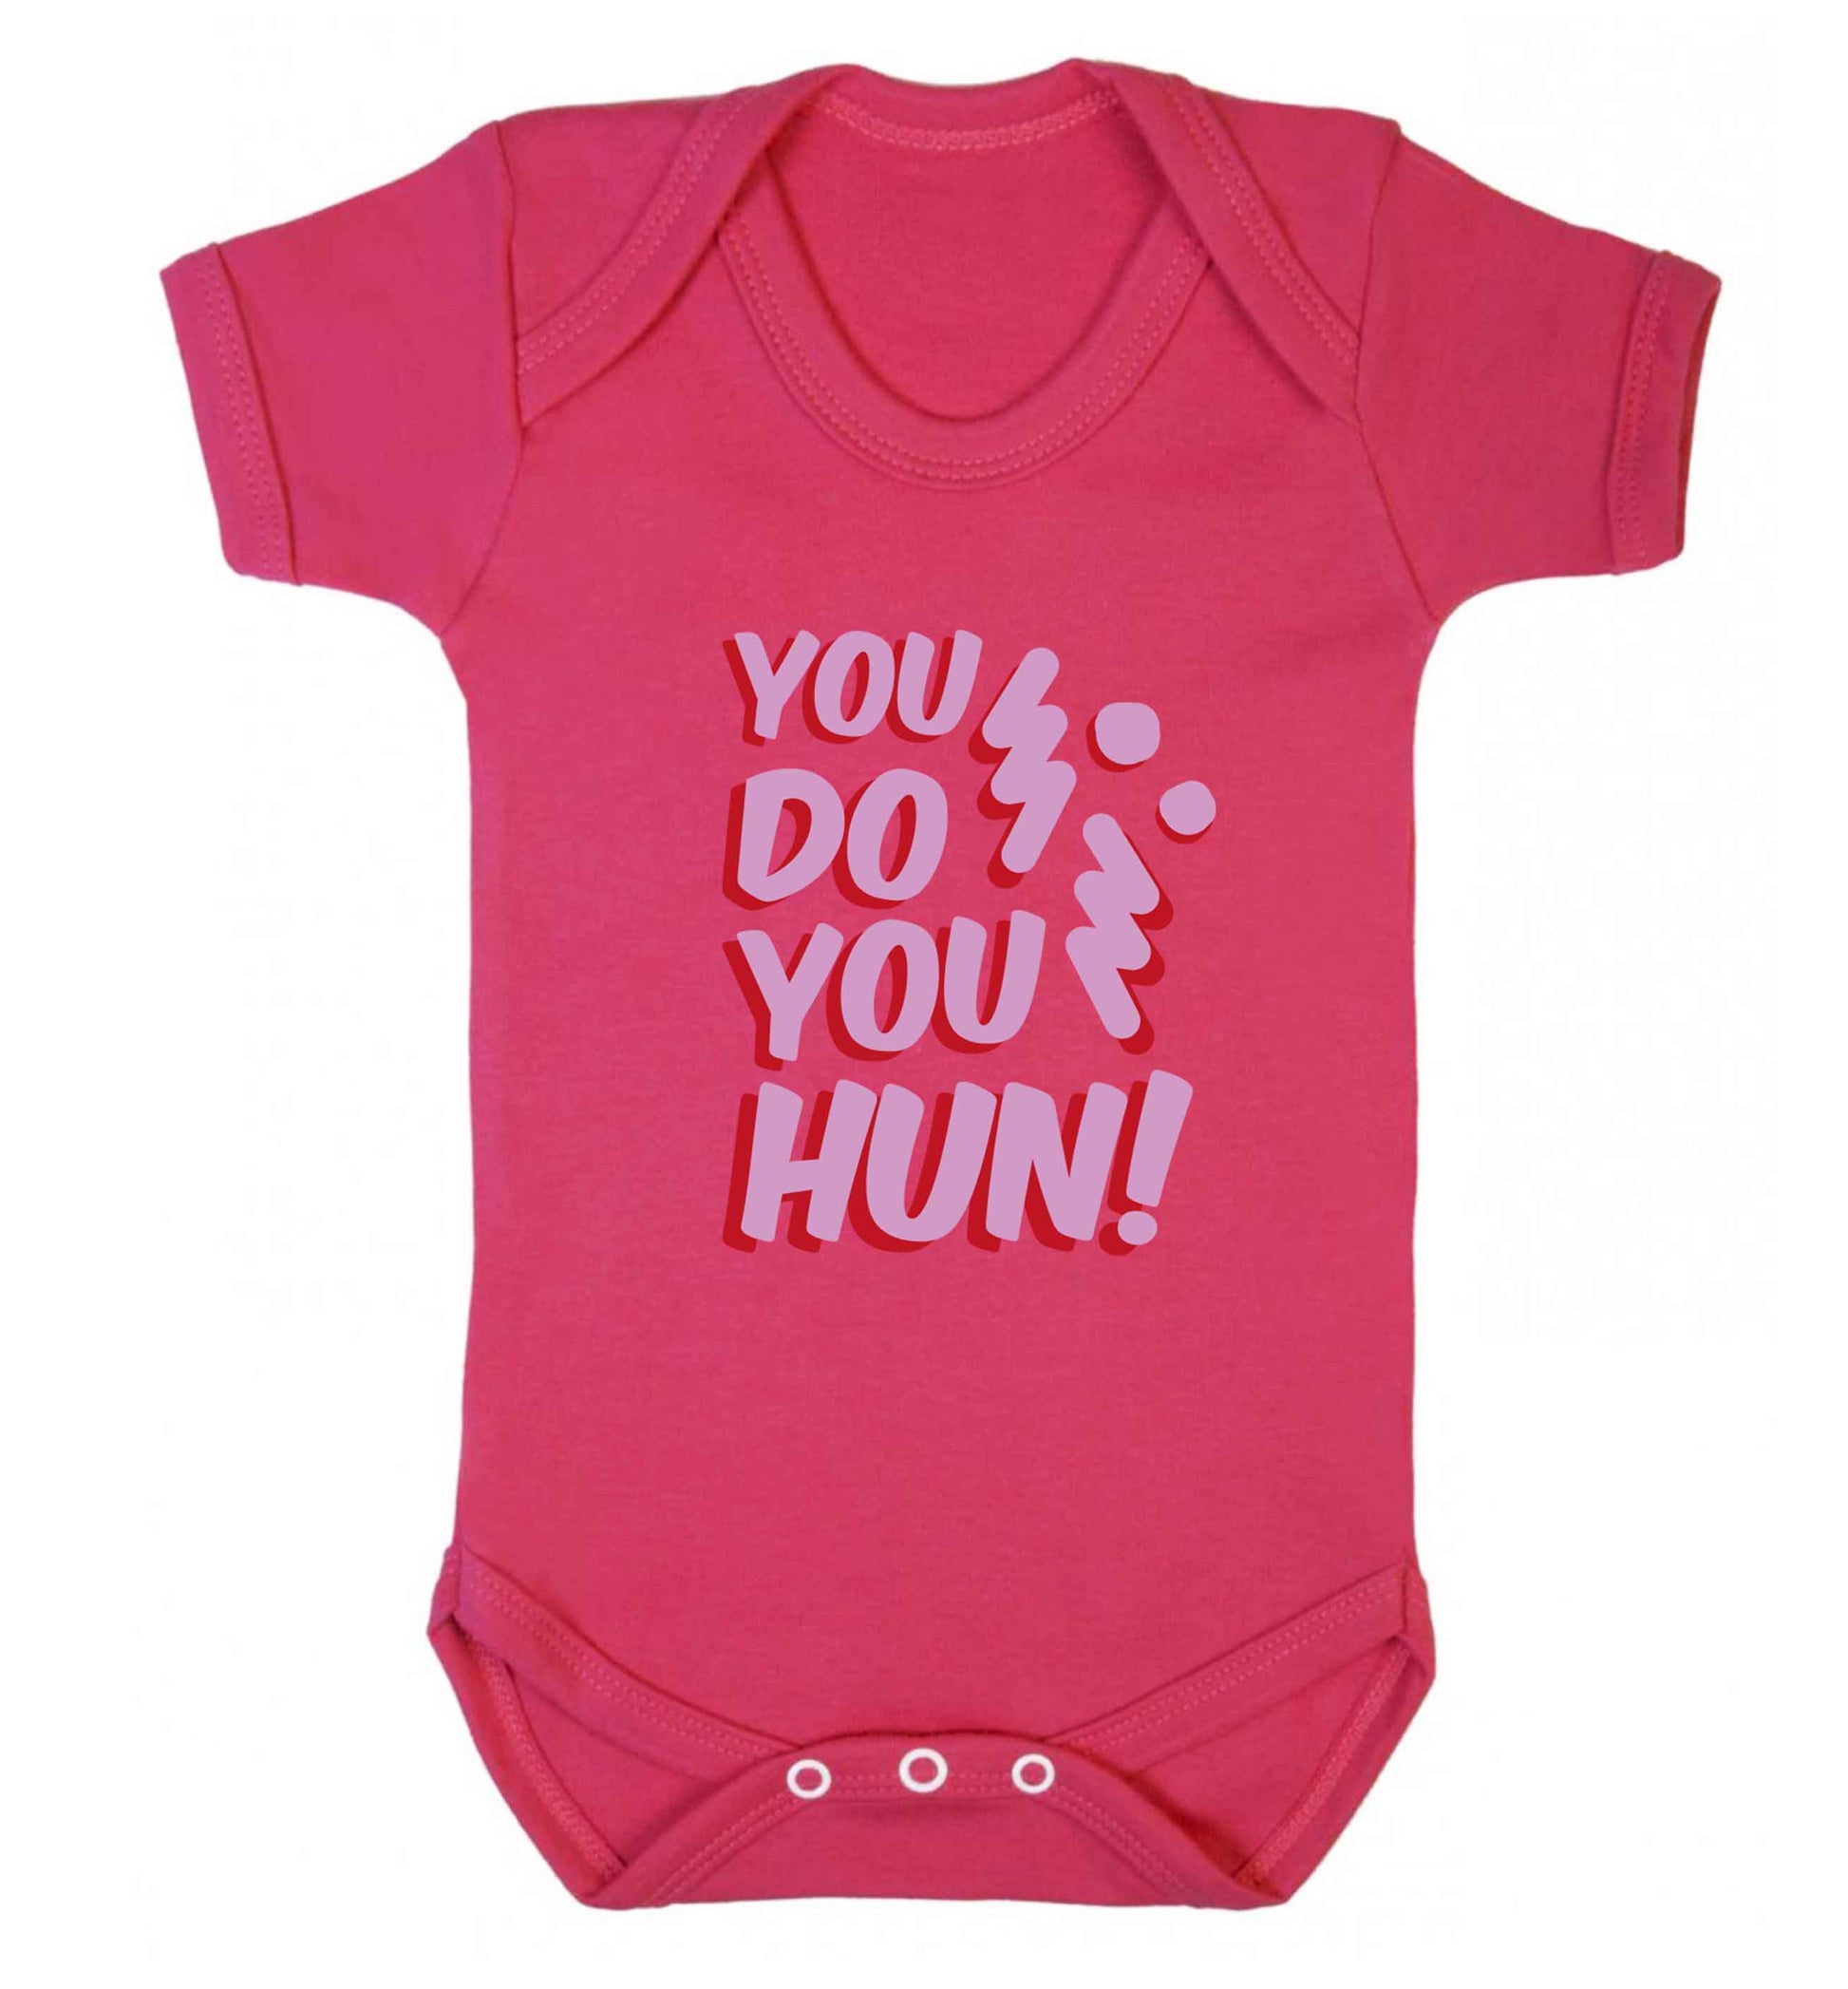 You do you hun baby vest dark pink 18-24 months